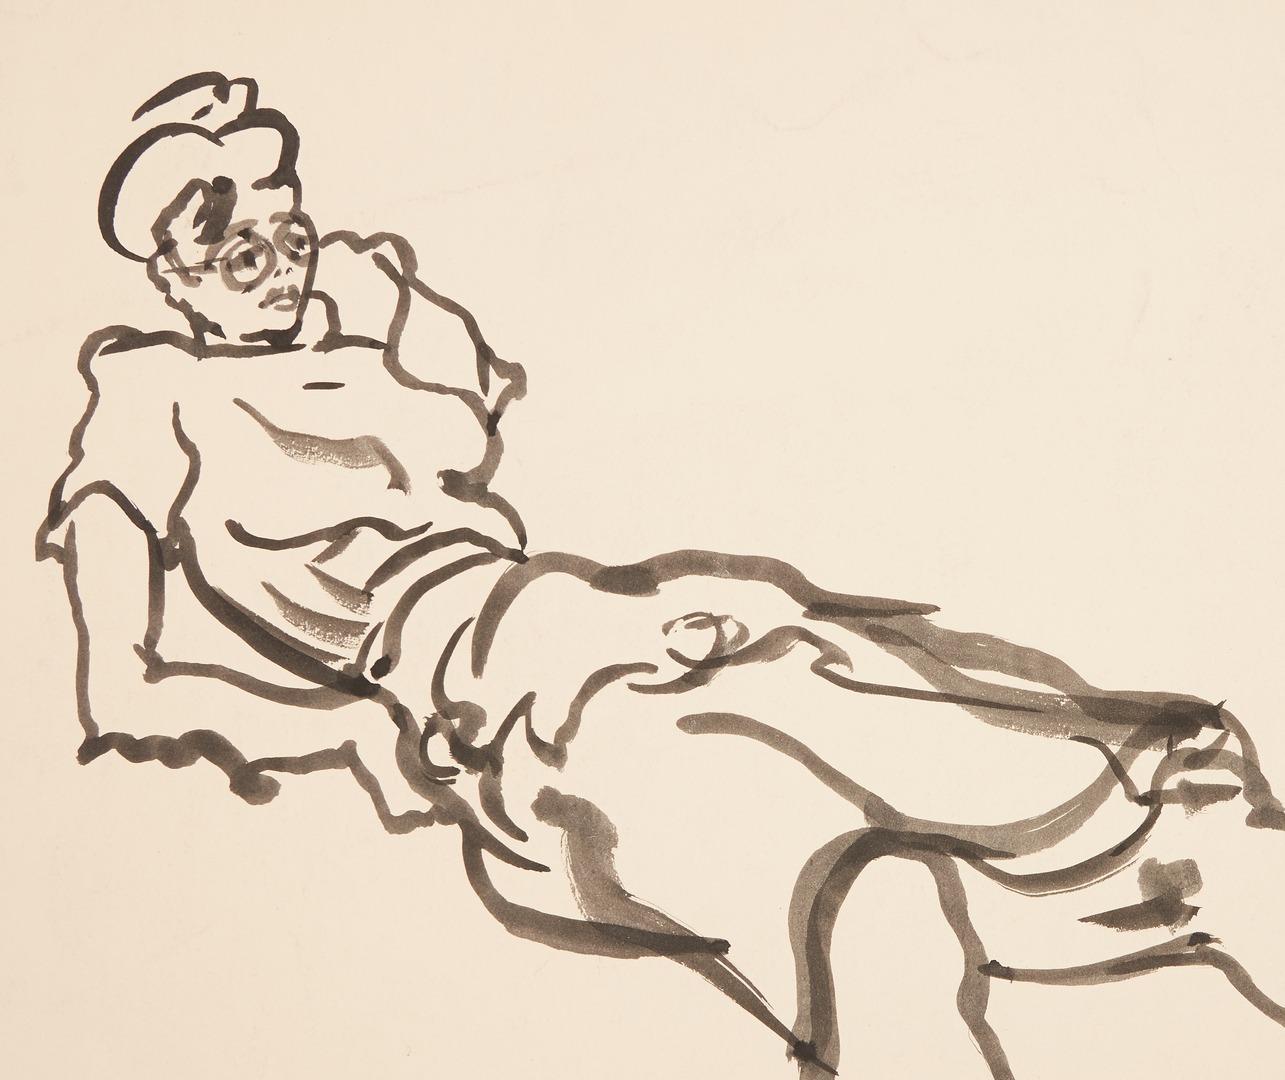 Lot 219: 3 Joseph Delaney Female Figure Sketches, incl. Nudes